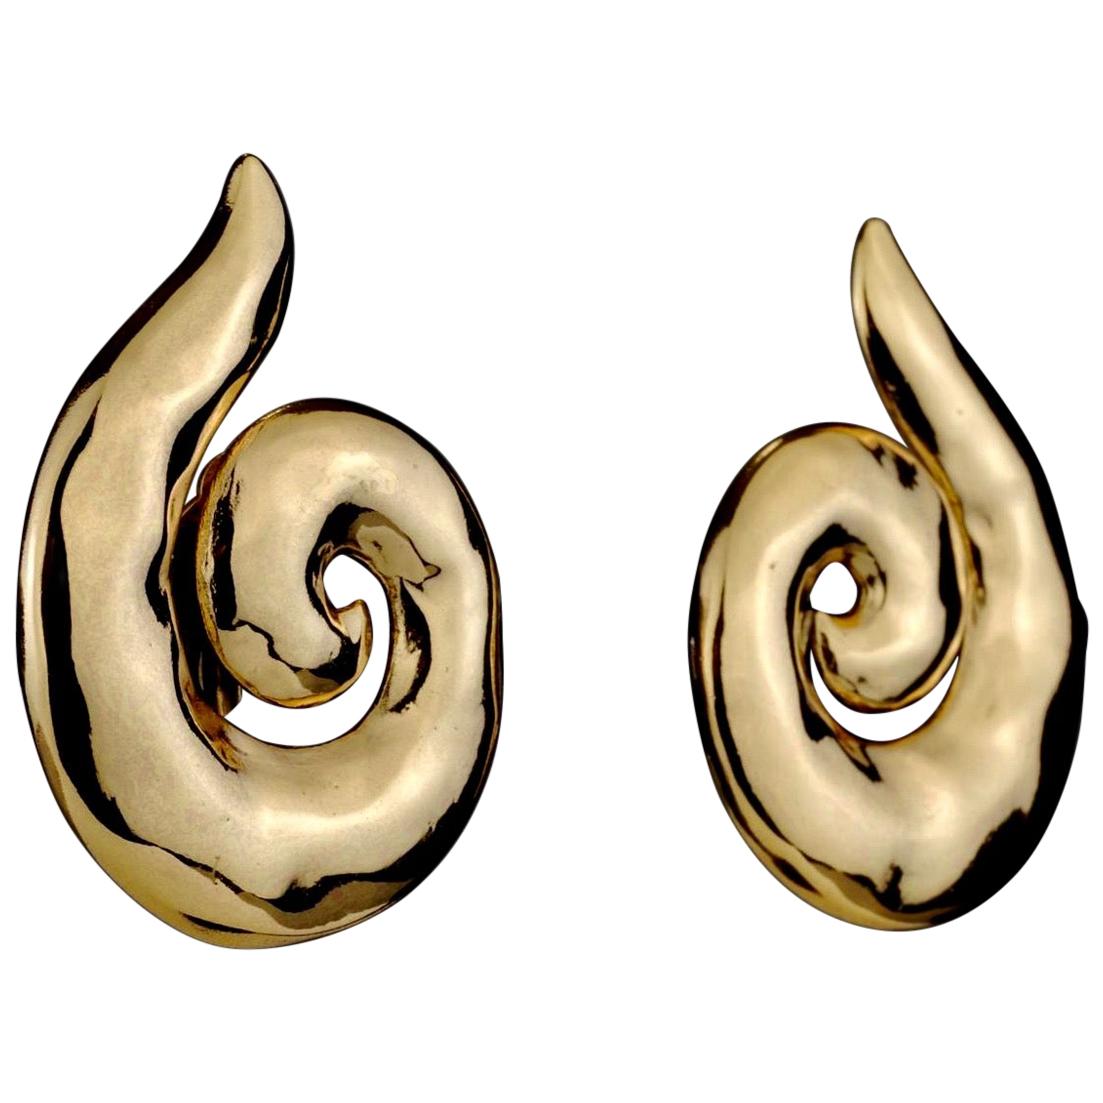 Vintage YVES SAINT LAURENT Ysl Coiled Spiral Earrings